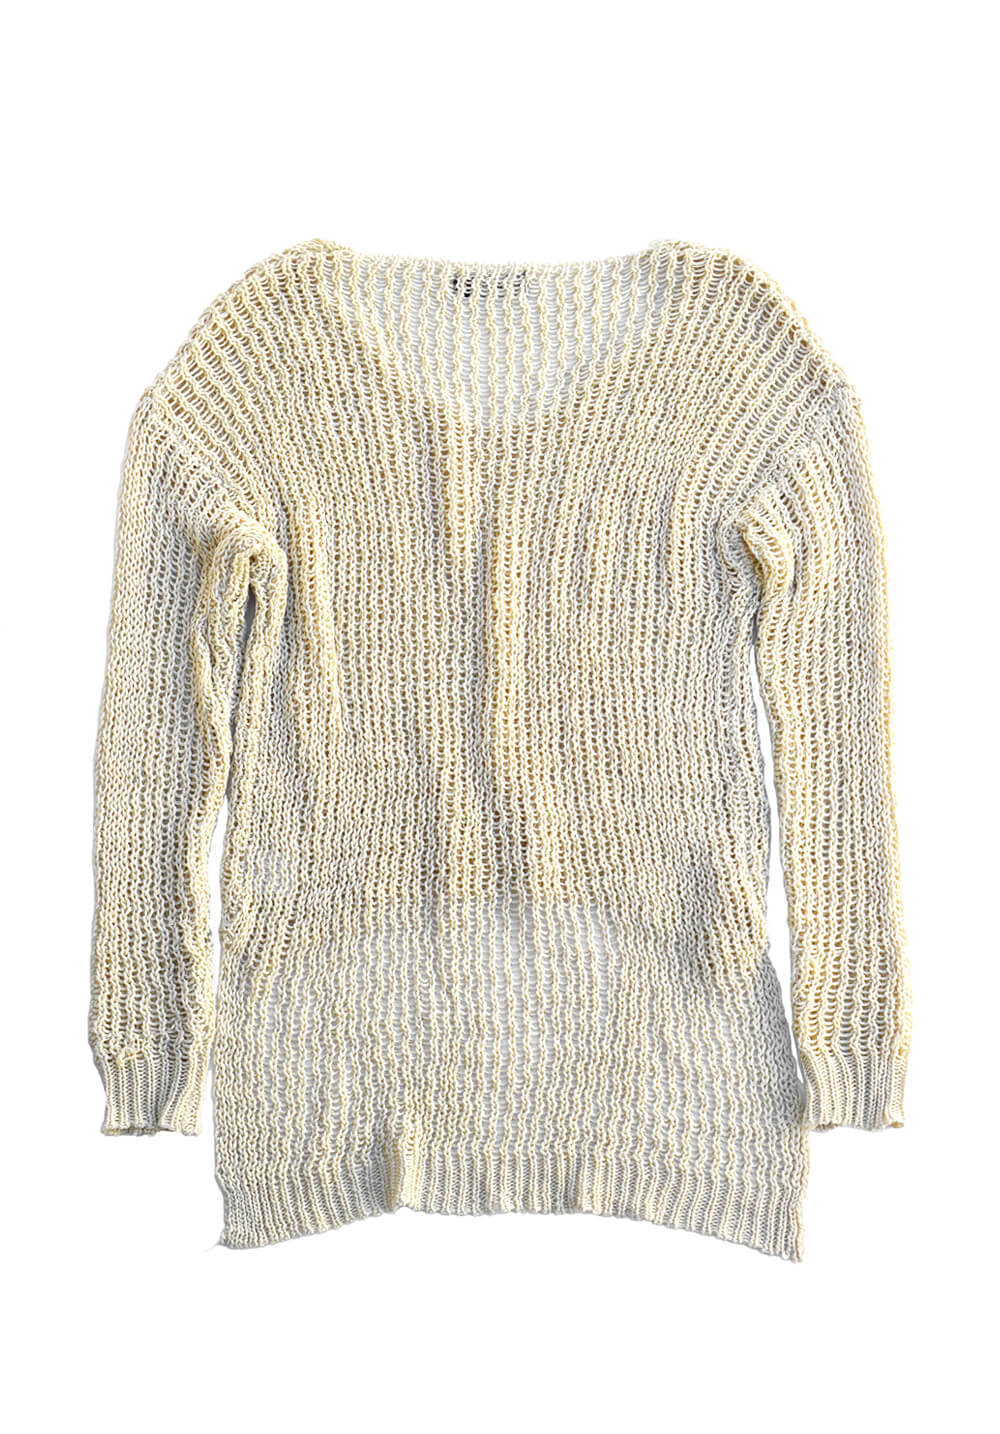 open knit sweater - cream - size s/m